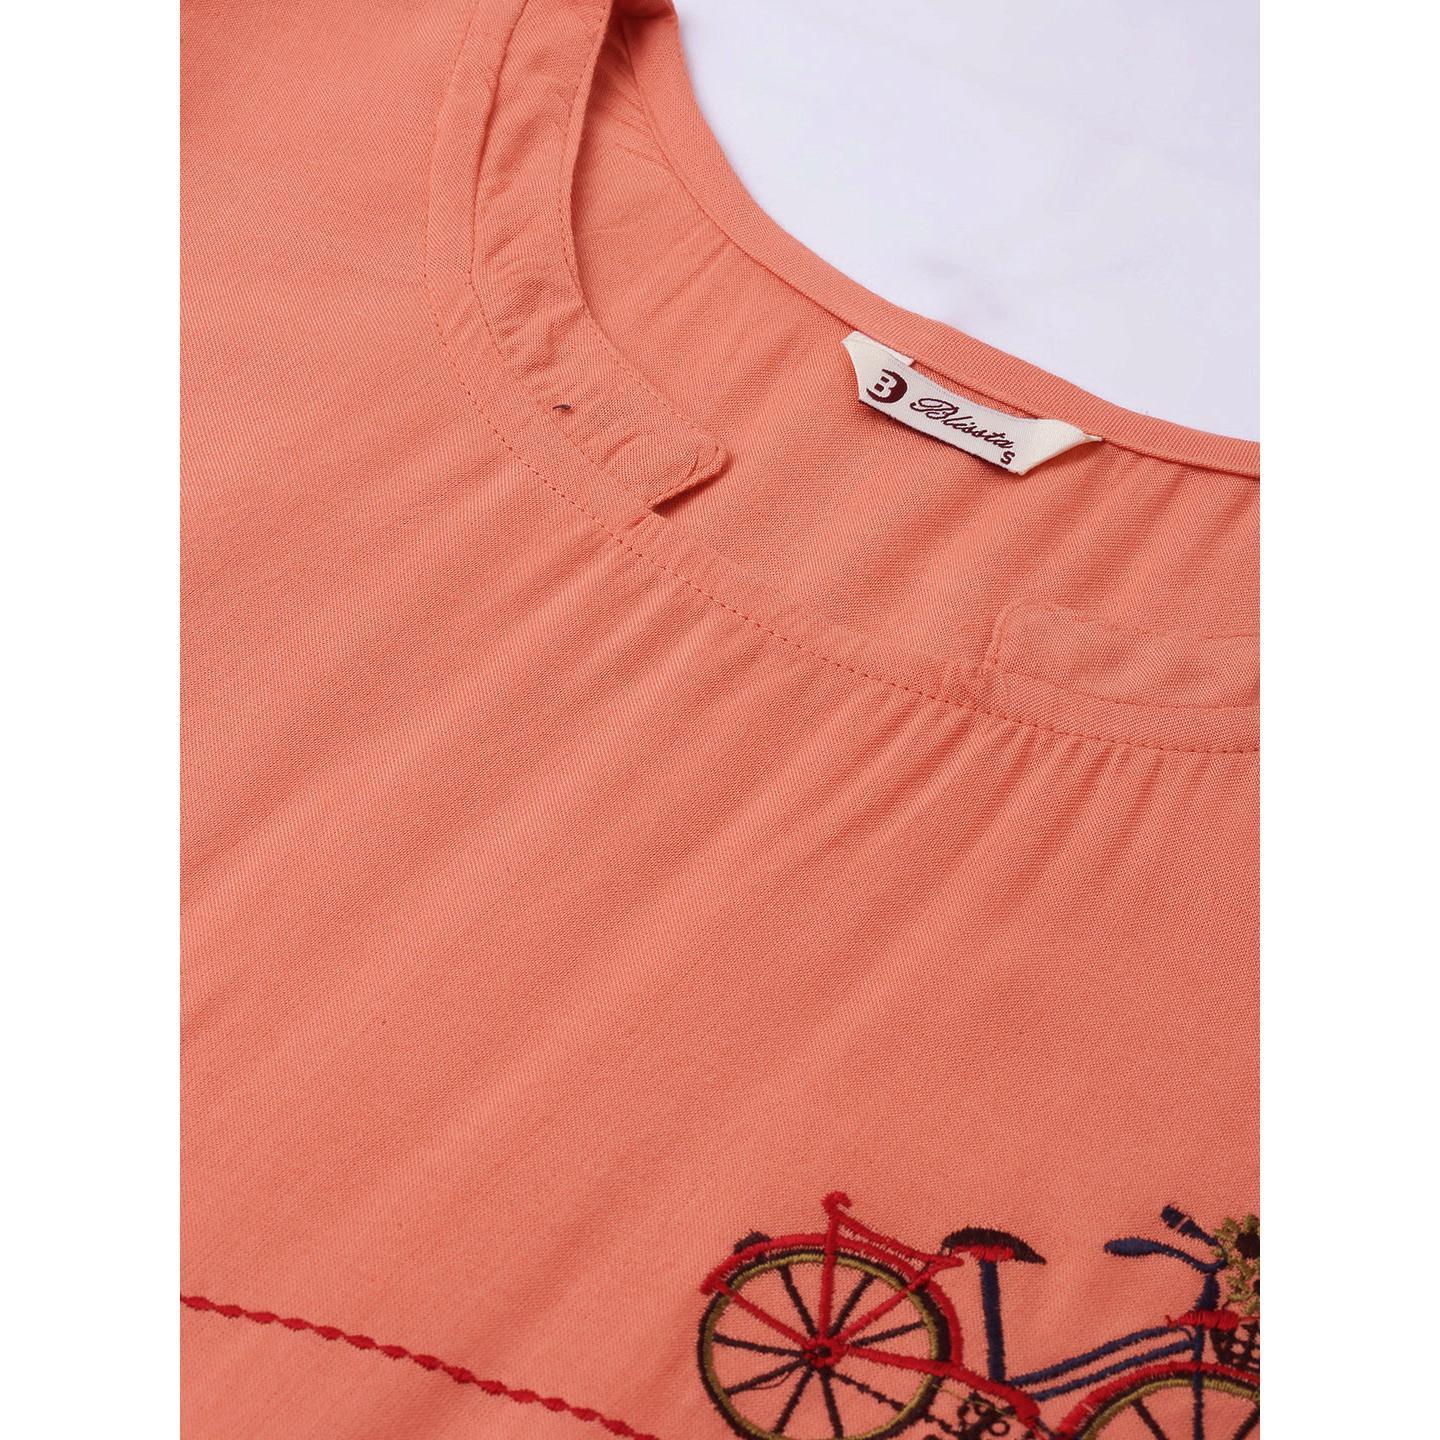 Blissta Women's Peach Coloured Rayon Embroidered Straight Kurti - Peachmode